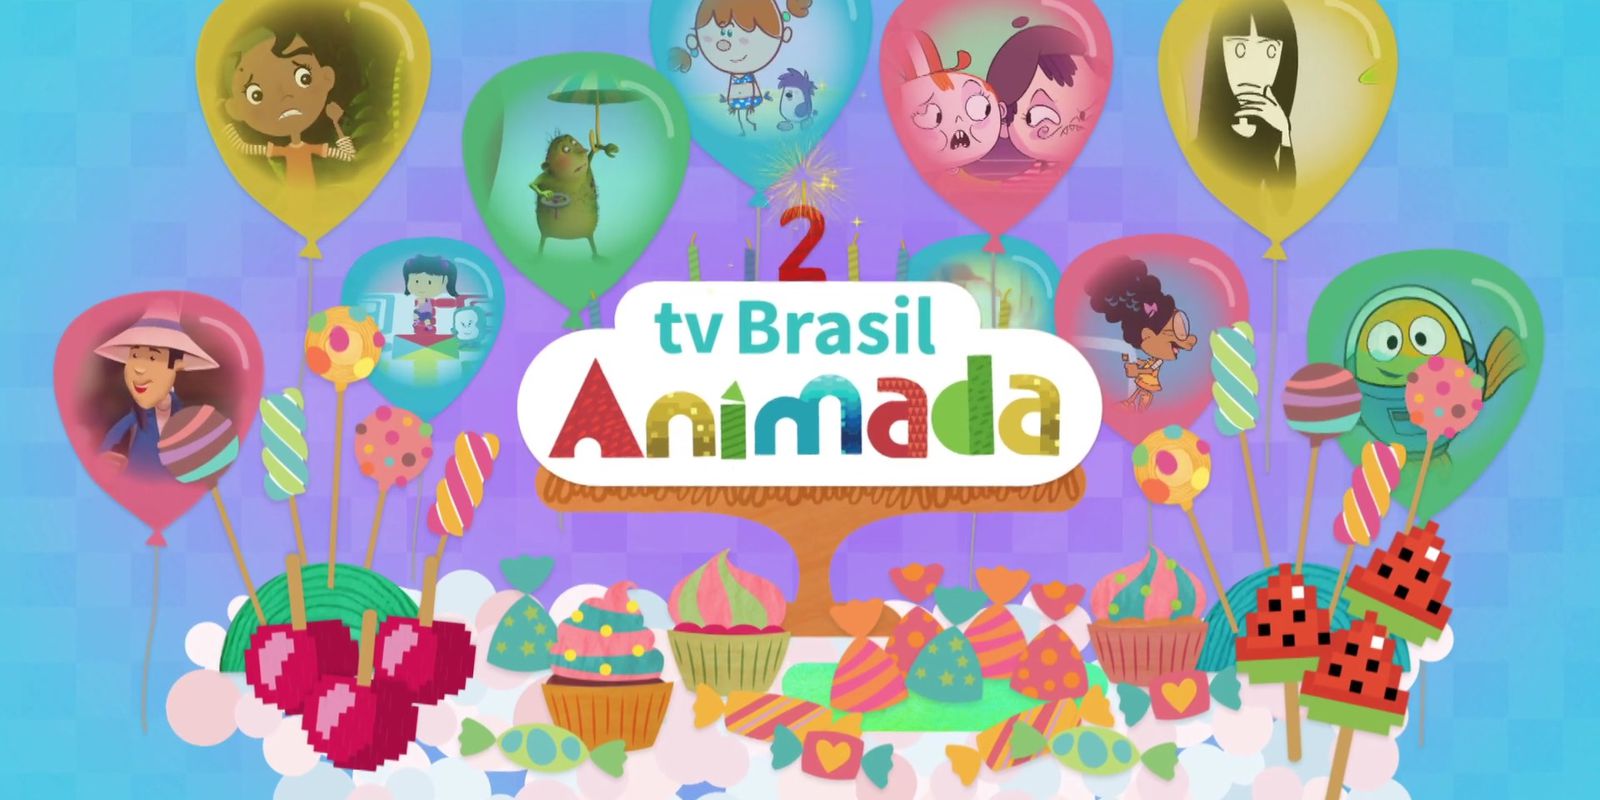 TV Brasil Animada is fun for kids in the morning